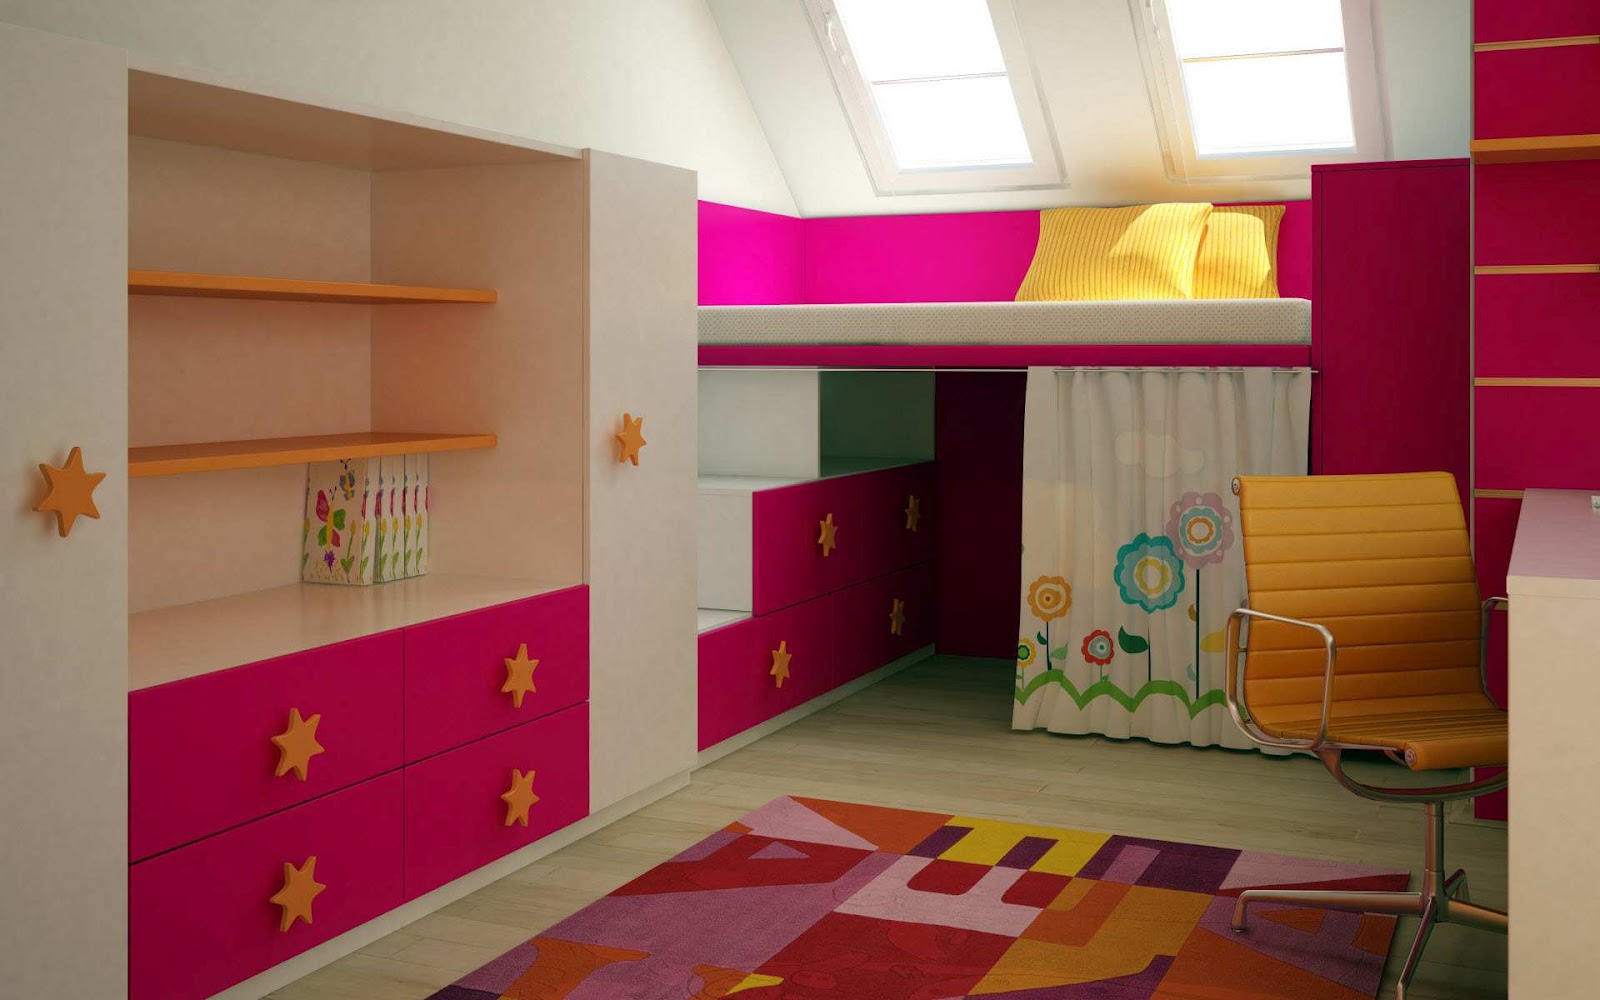 http://1.bp.blogspot.com/-6JEMOFevEWg/UFgqknc35yI/AAAAAAAABEI/pba459VAF6o/s1600/Beautiful+Pink+Kids+Room+Interior+Design.jpg